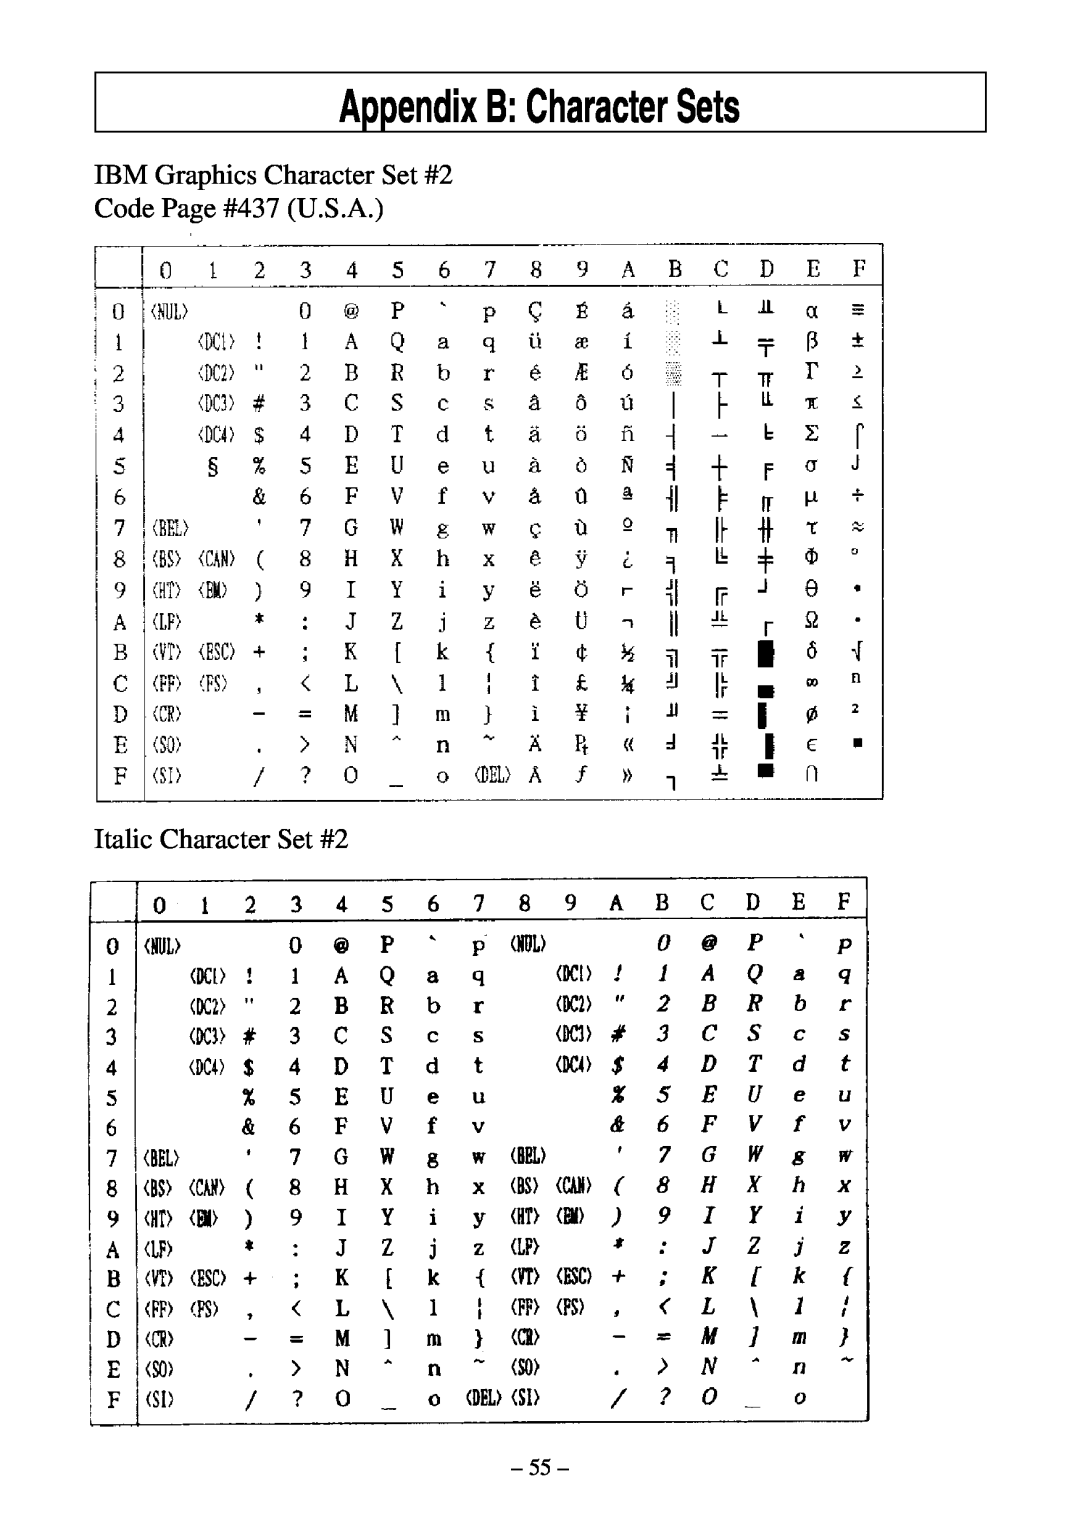 Star Micronics LC-500 user manual Appendix B Character Sets, IBM Graphics Character Set #2 Code Page #437 U.S.A 